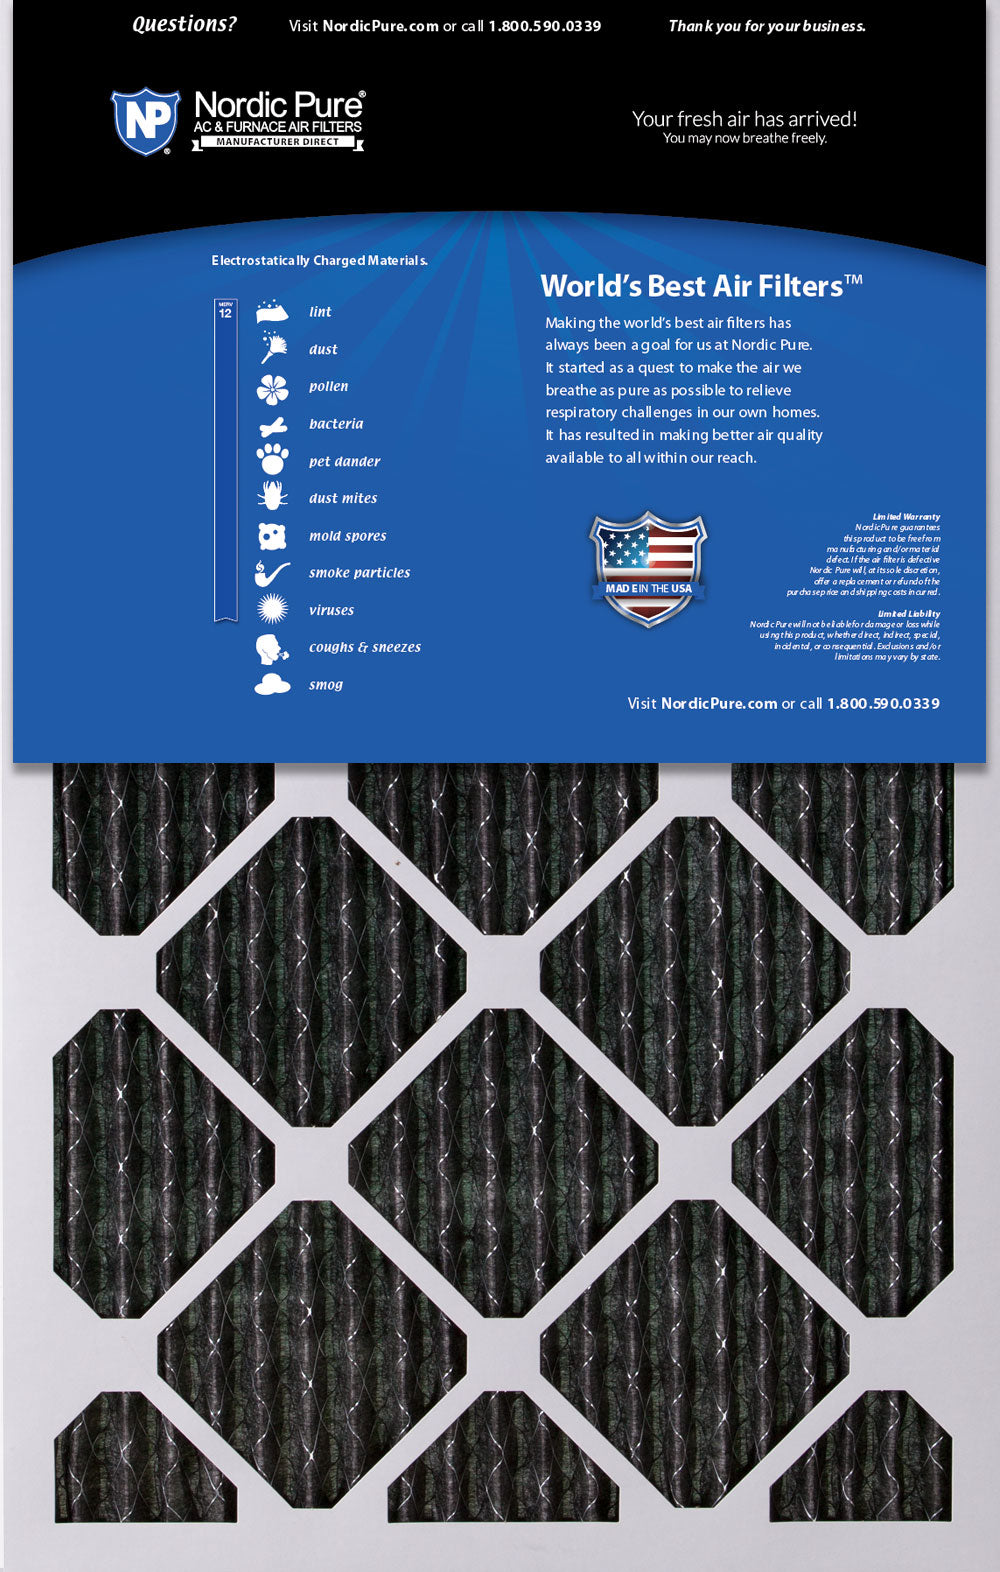 14 1/2x27 1/2x1 MERV 12 Plus Carbon AC Furnace Filters